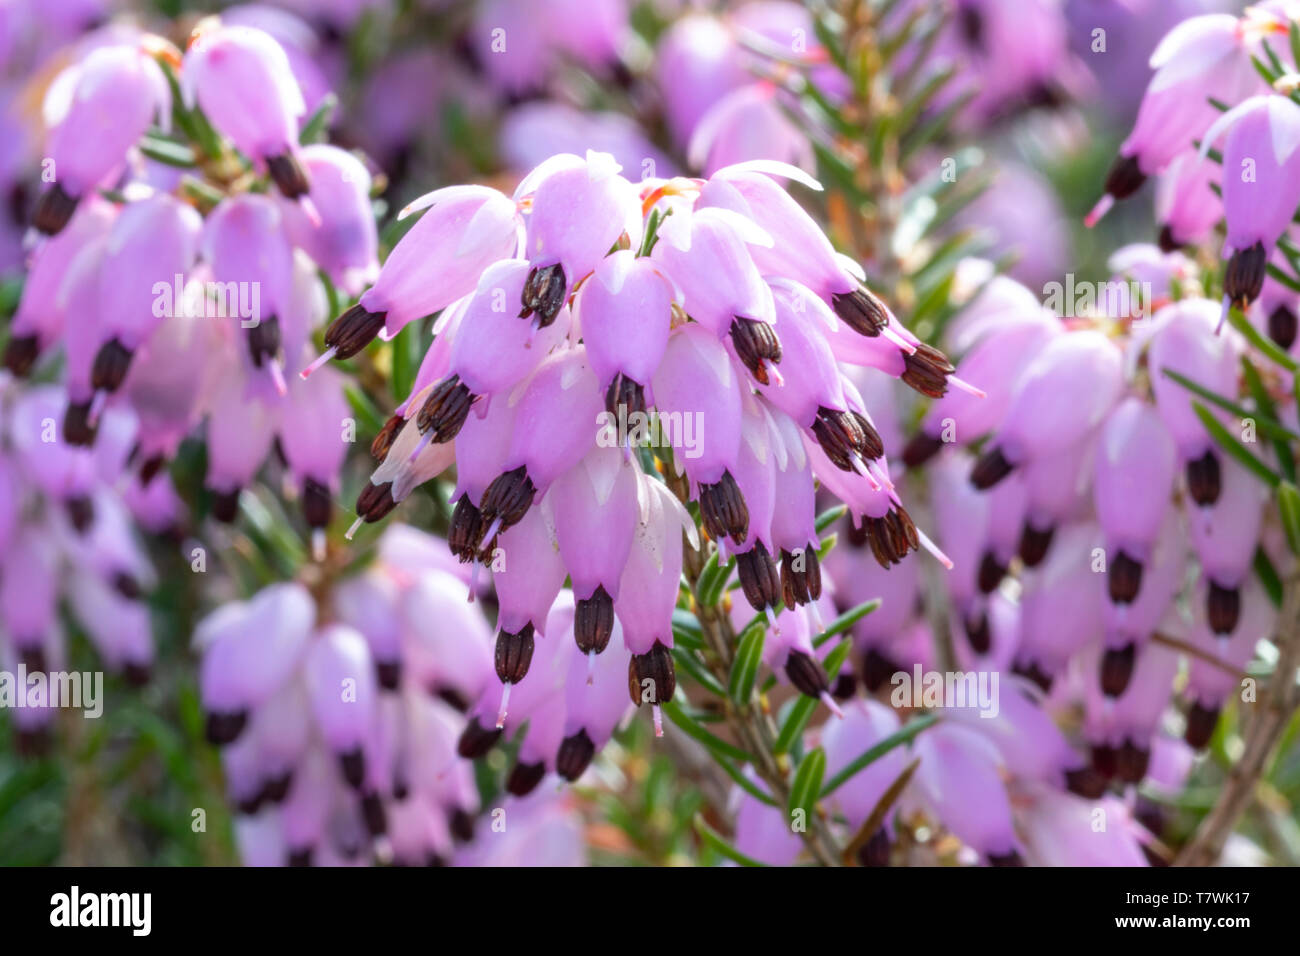 Closeup view of violet calluna vulgaris flowers Stock Photo